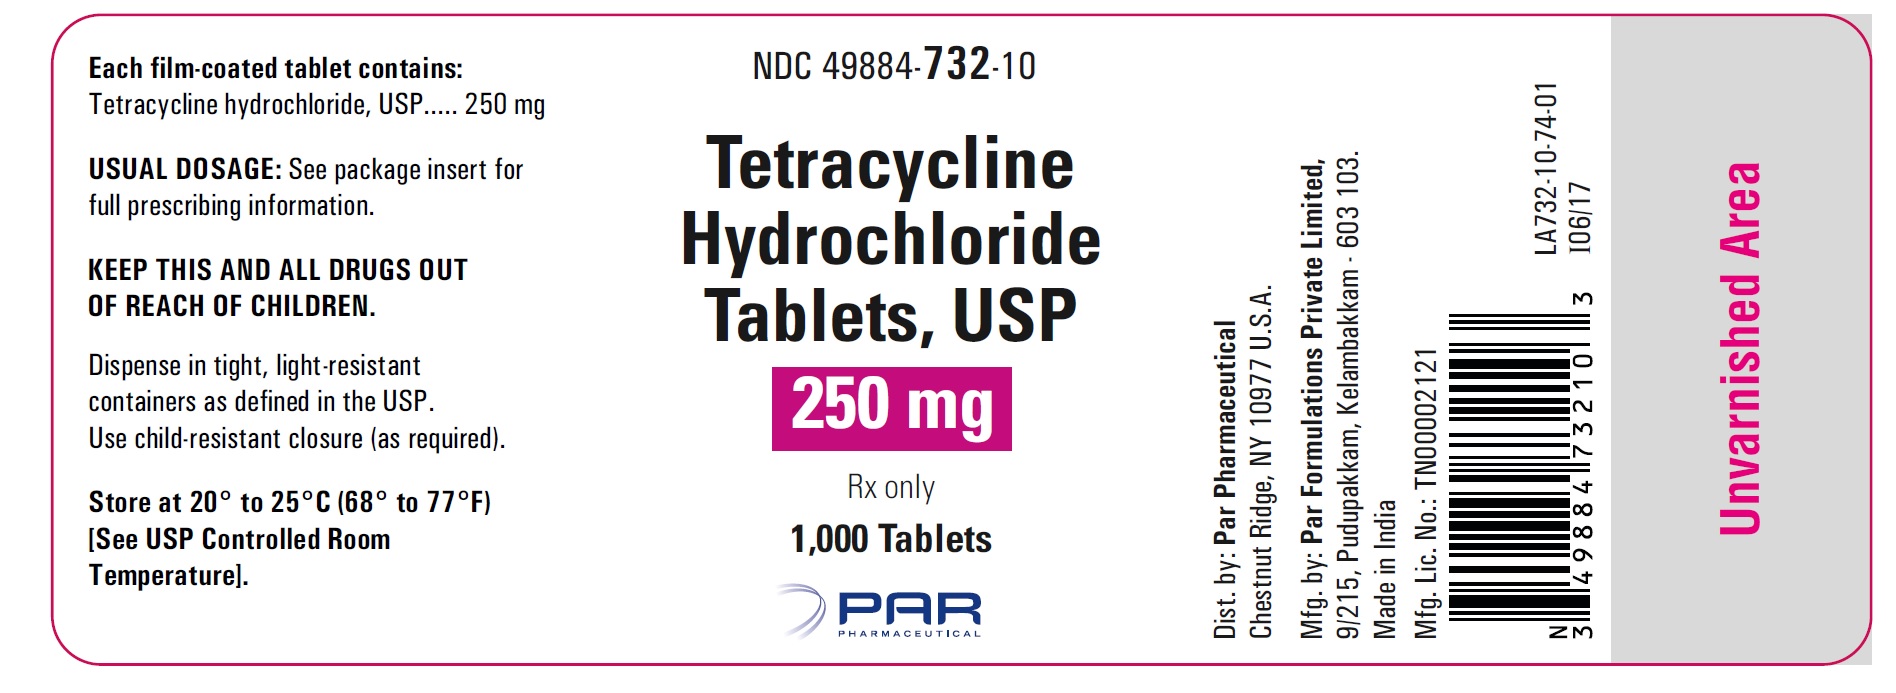 tetracycline-hydrochloride-3.jpg